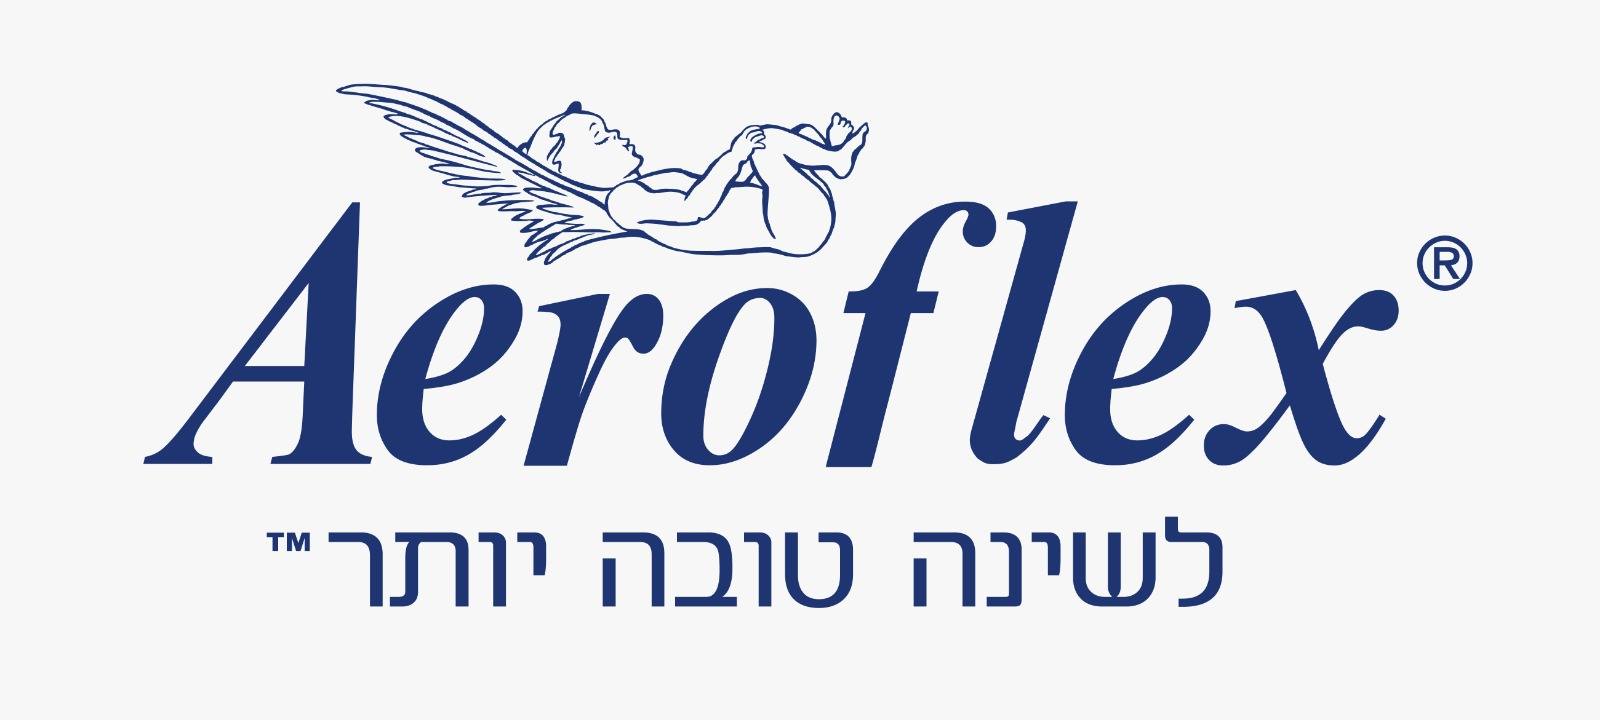 aeroflex logo